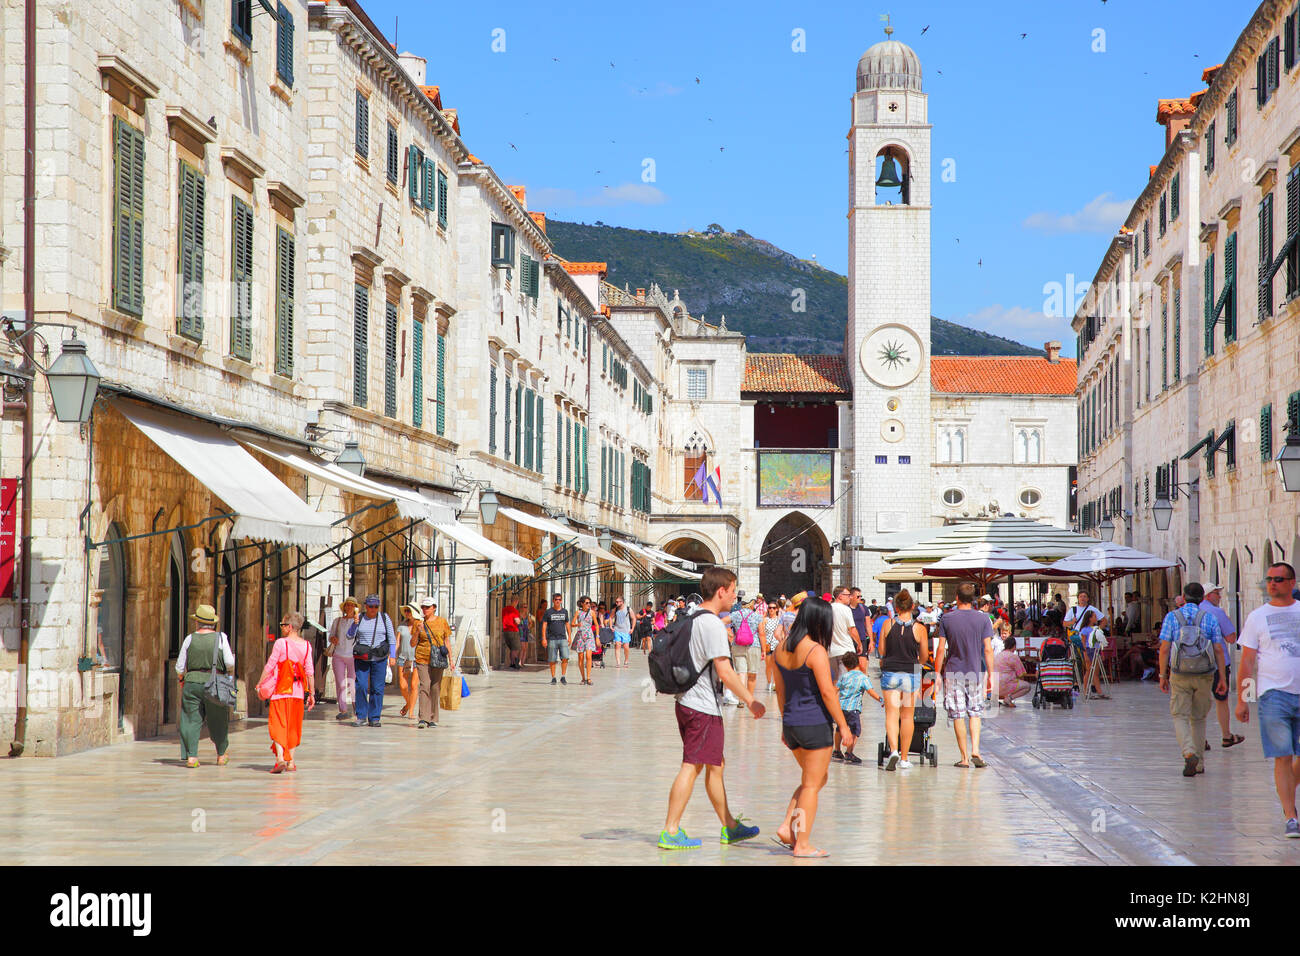 Dubrovnik, Croatia - Jine 11, 2017: People in Stradun street in Old Town of Dubrovnik Stock Photo